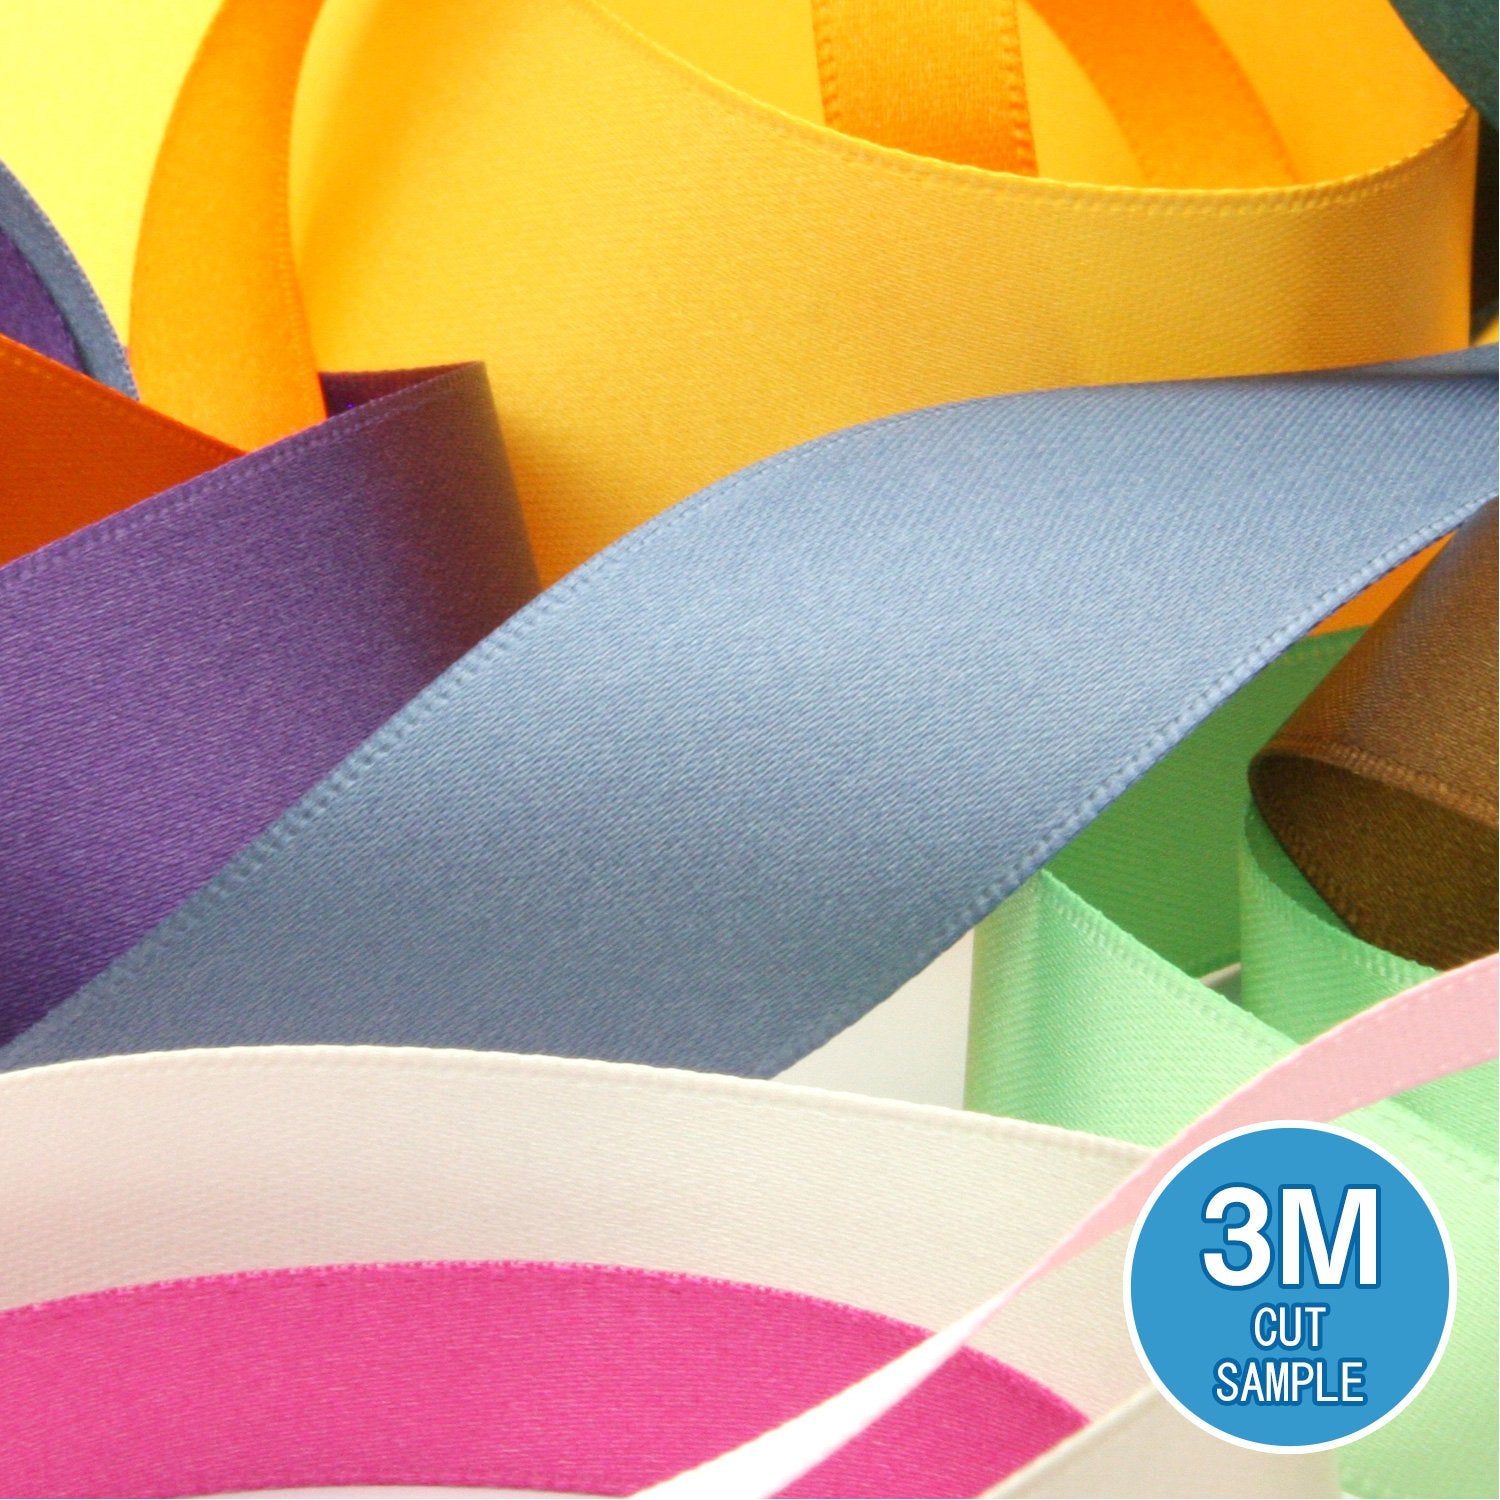 FUJIYAMA RIBBON [Sample] Polyester Double-Face Satin Ribbon (FY-242) 3mm 3 Meters Cut